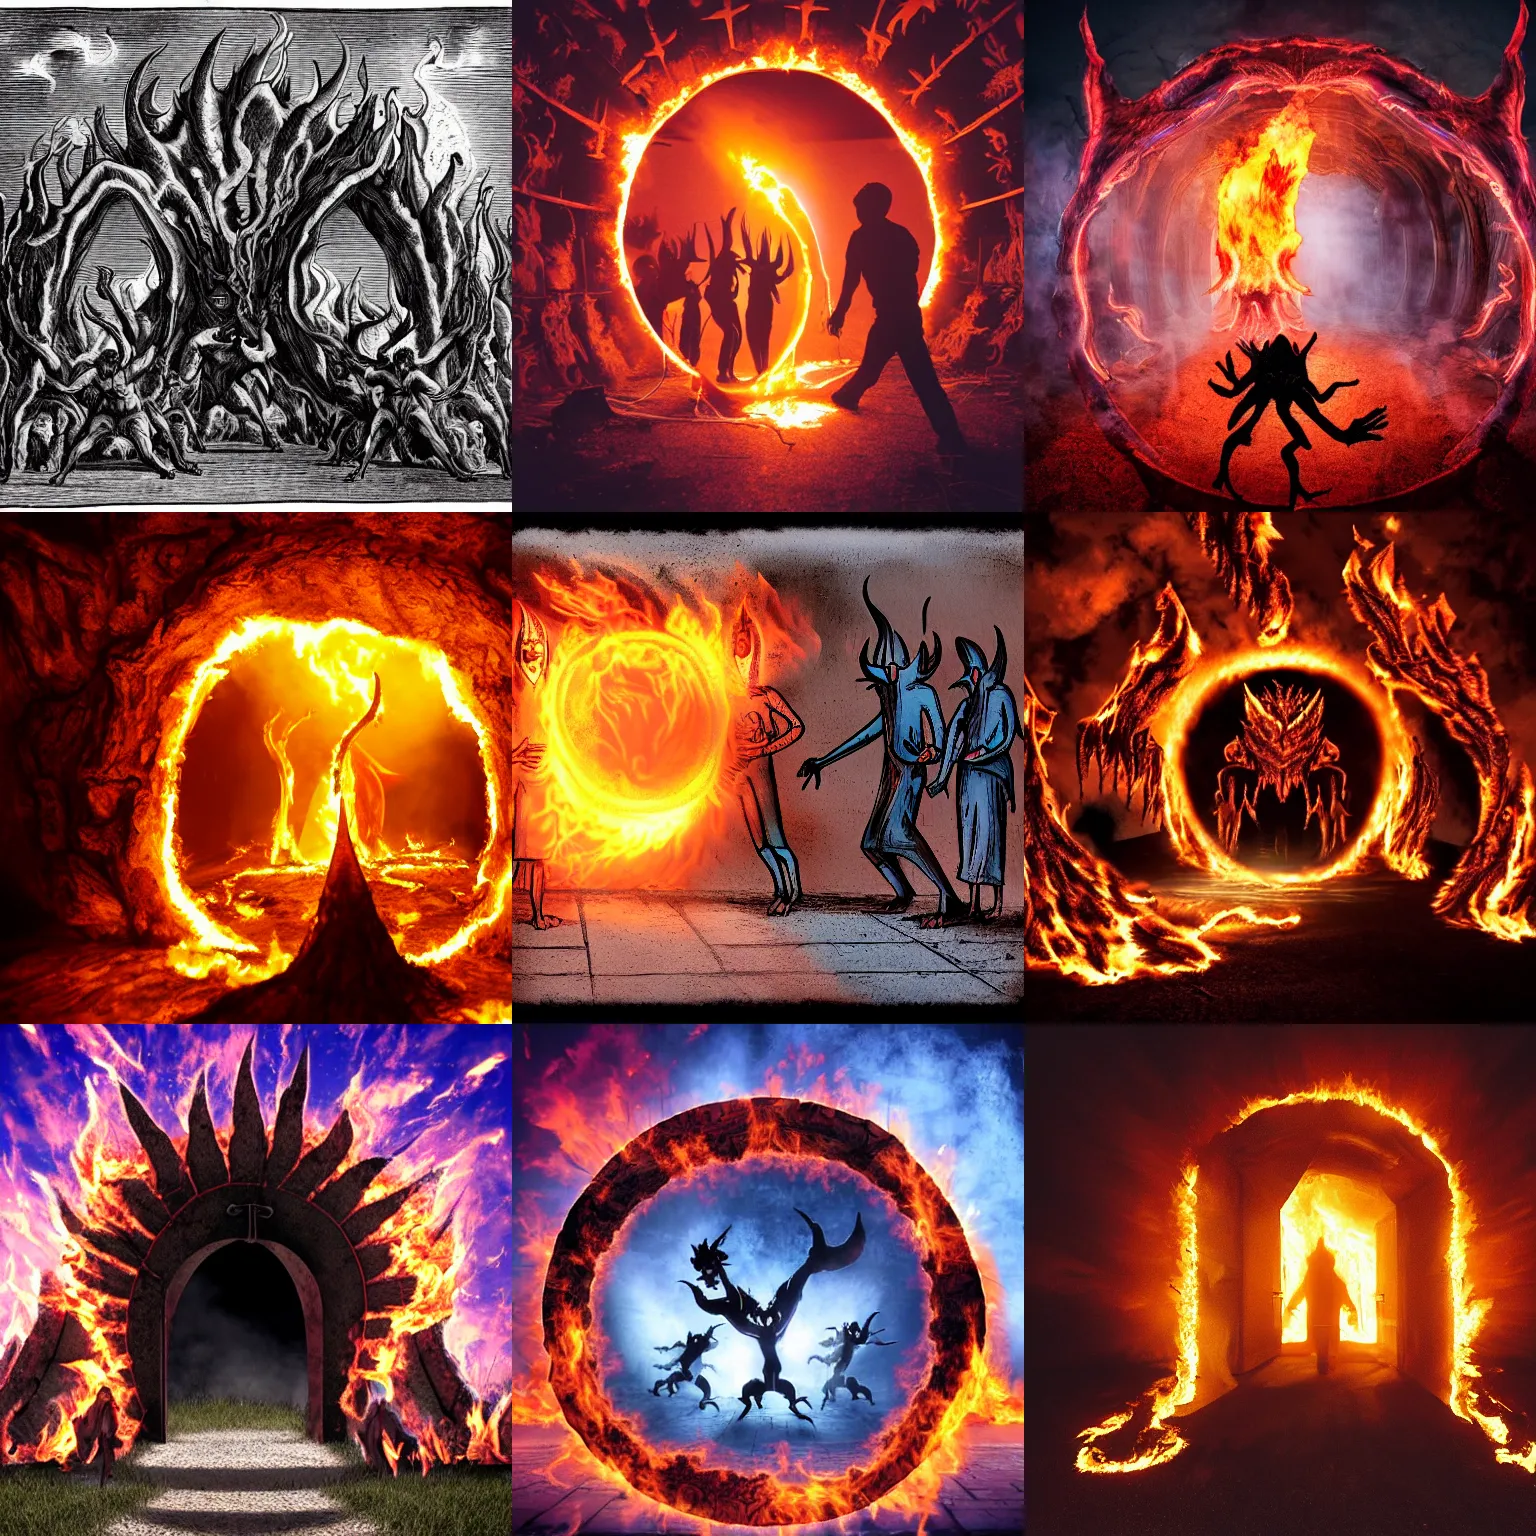 Prompt: demons entering through a burning portal